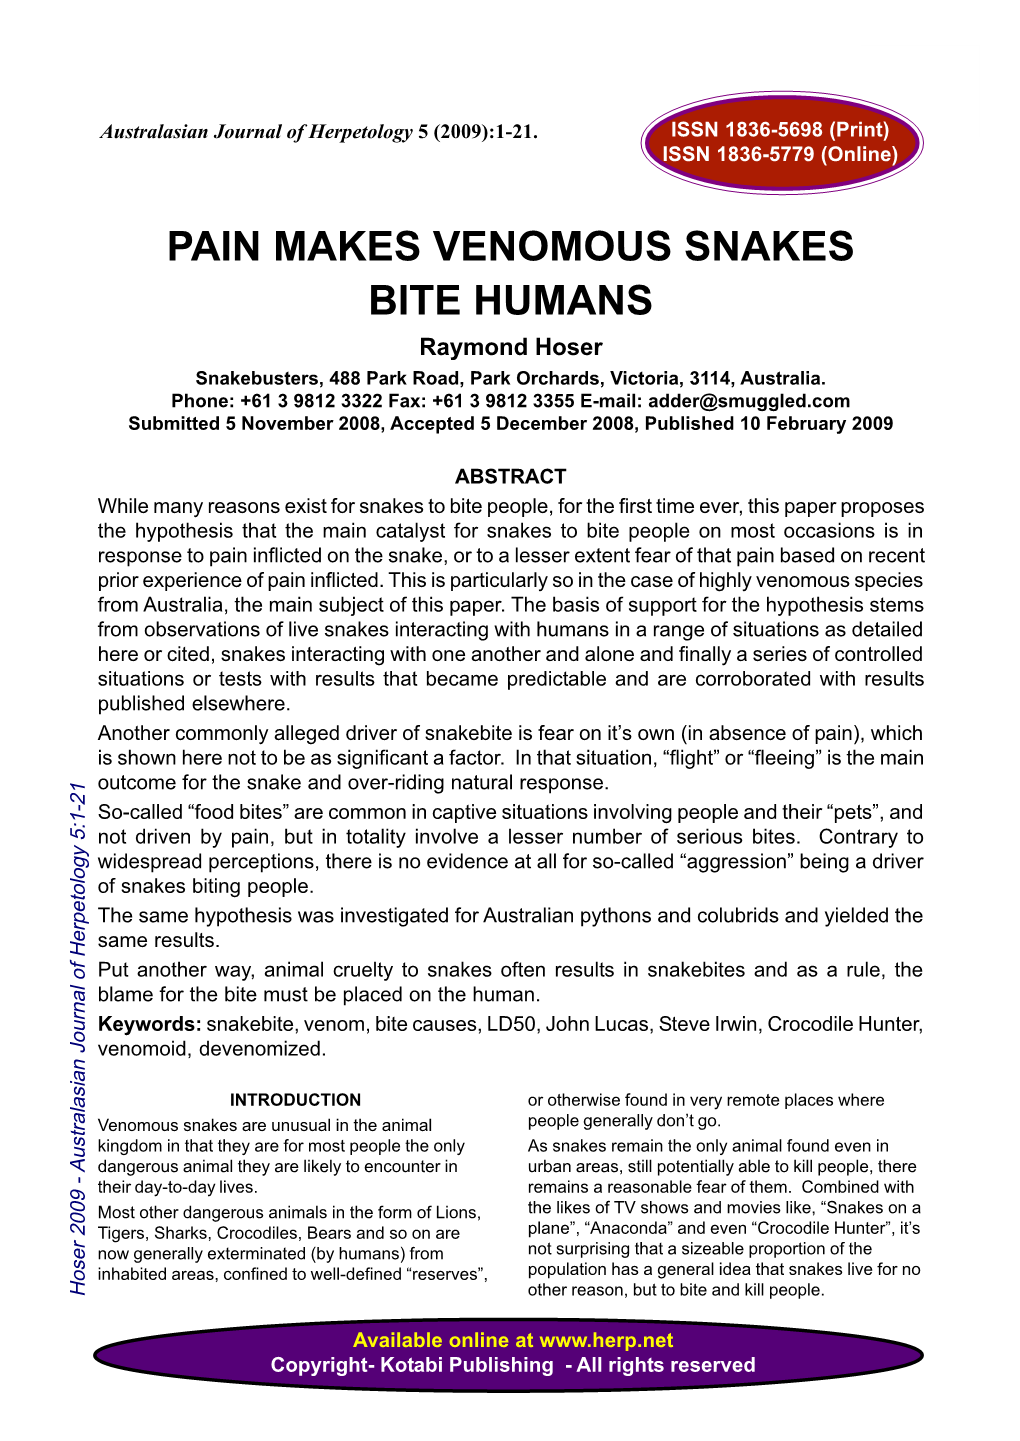 PAIN MAKES VENOMOUS SNAKES BITE HUMANS Raymond Hoser Snakebusters, 488 Park Road, Park Orchards, Victoria, 3114, Australia